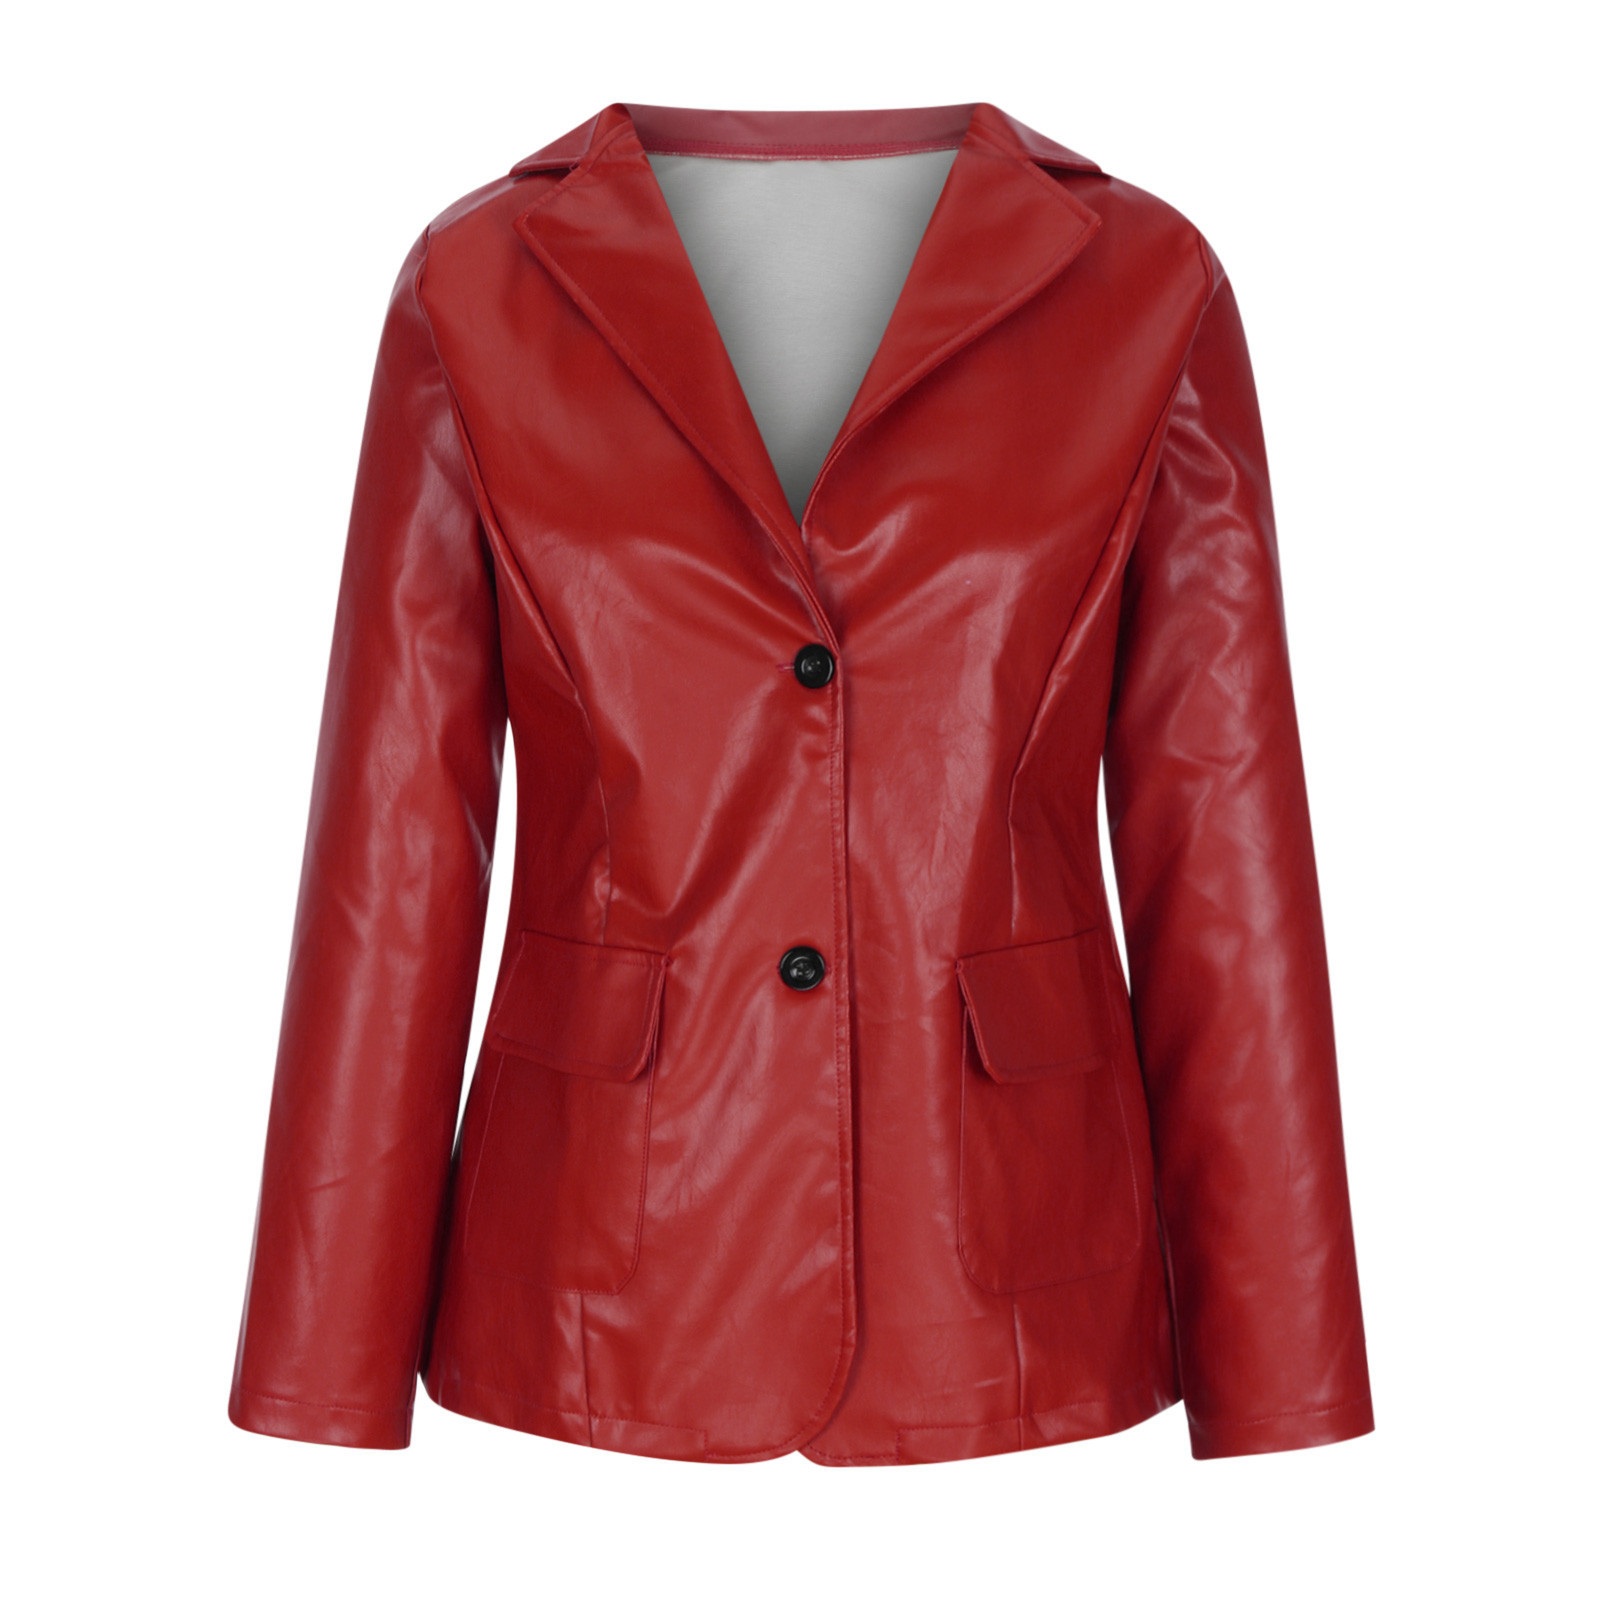 XIAOFFENN Women's Faux Leather Jackets, Lapel Collar Button Pocket Lightweight Motorcycle Jacket Leather Jacket Coat Pleather Outwear Red XL - image 4 of 7